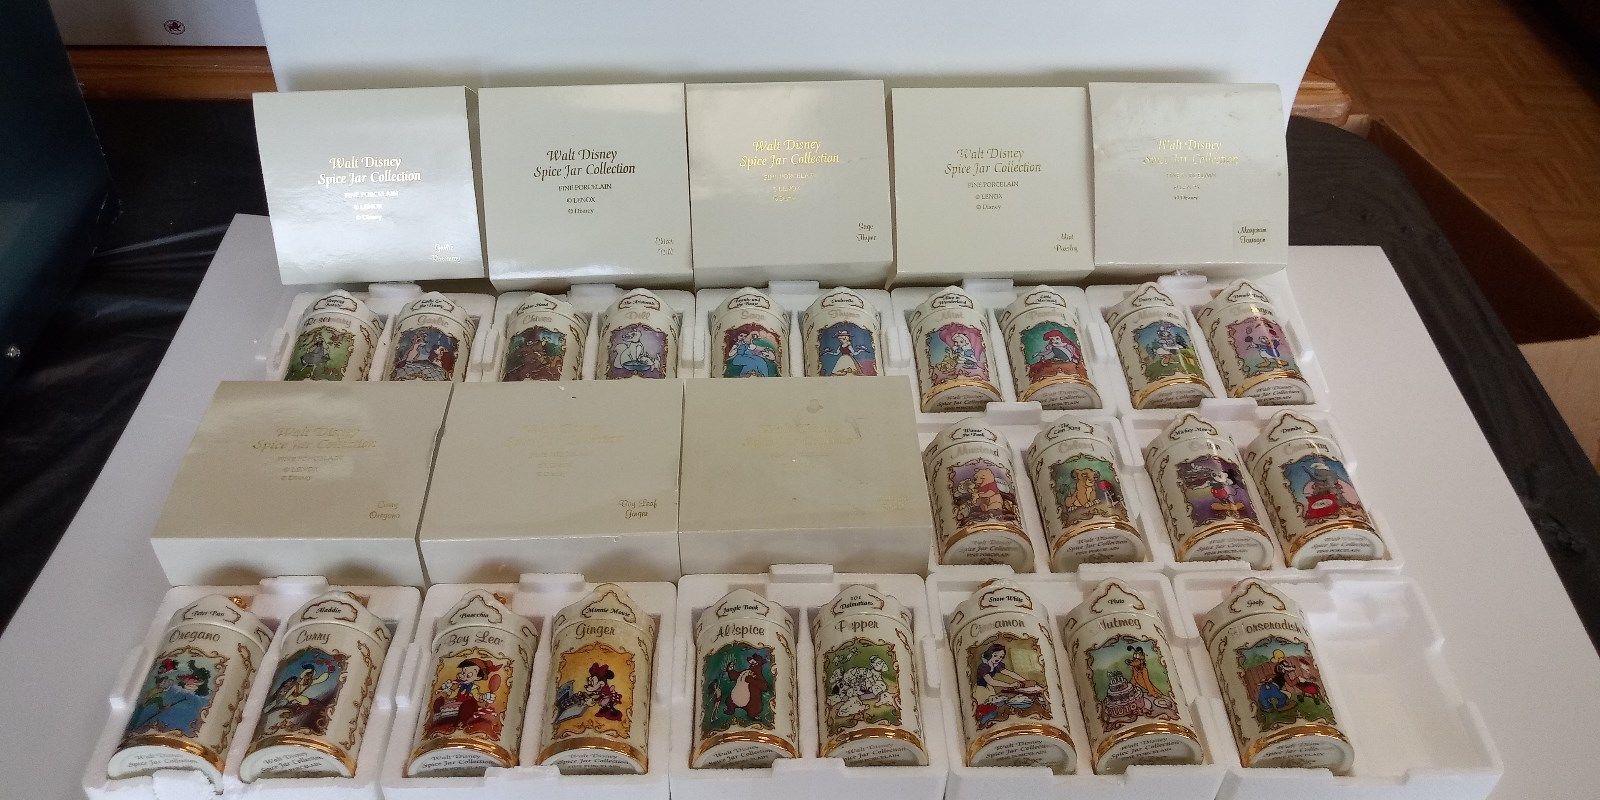 Sold at Auction: Lenox Walt Disney Spice Jar Collection